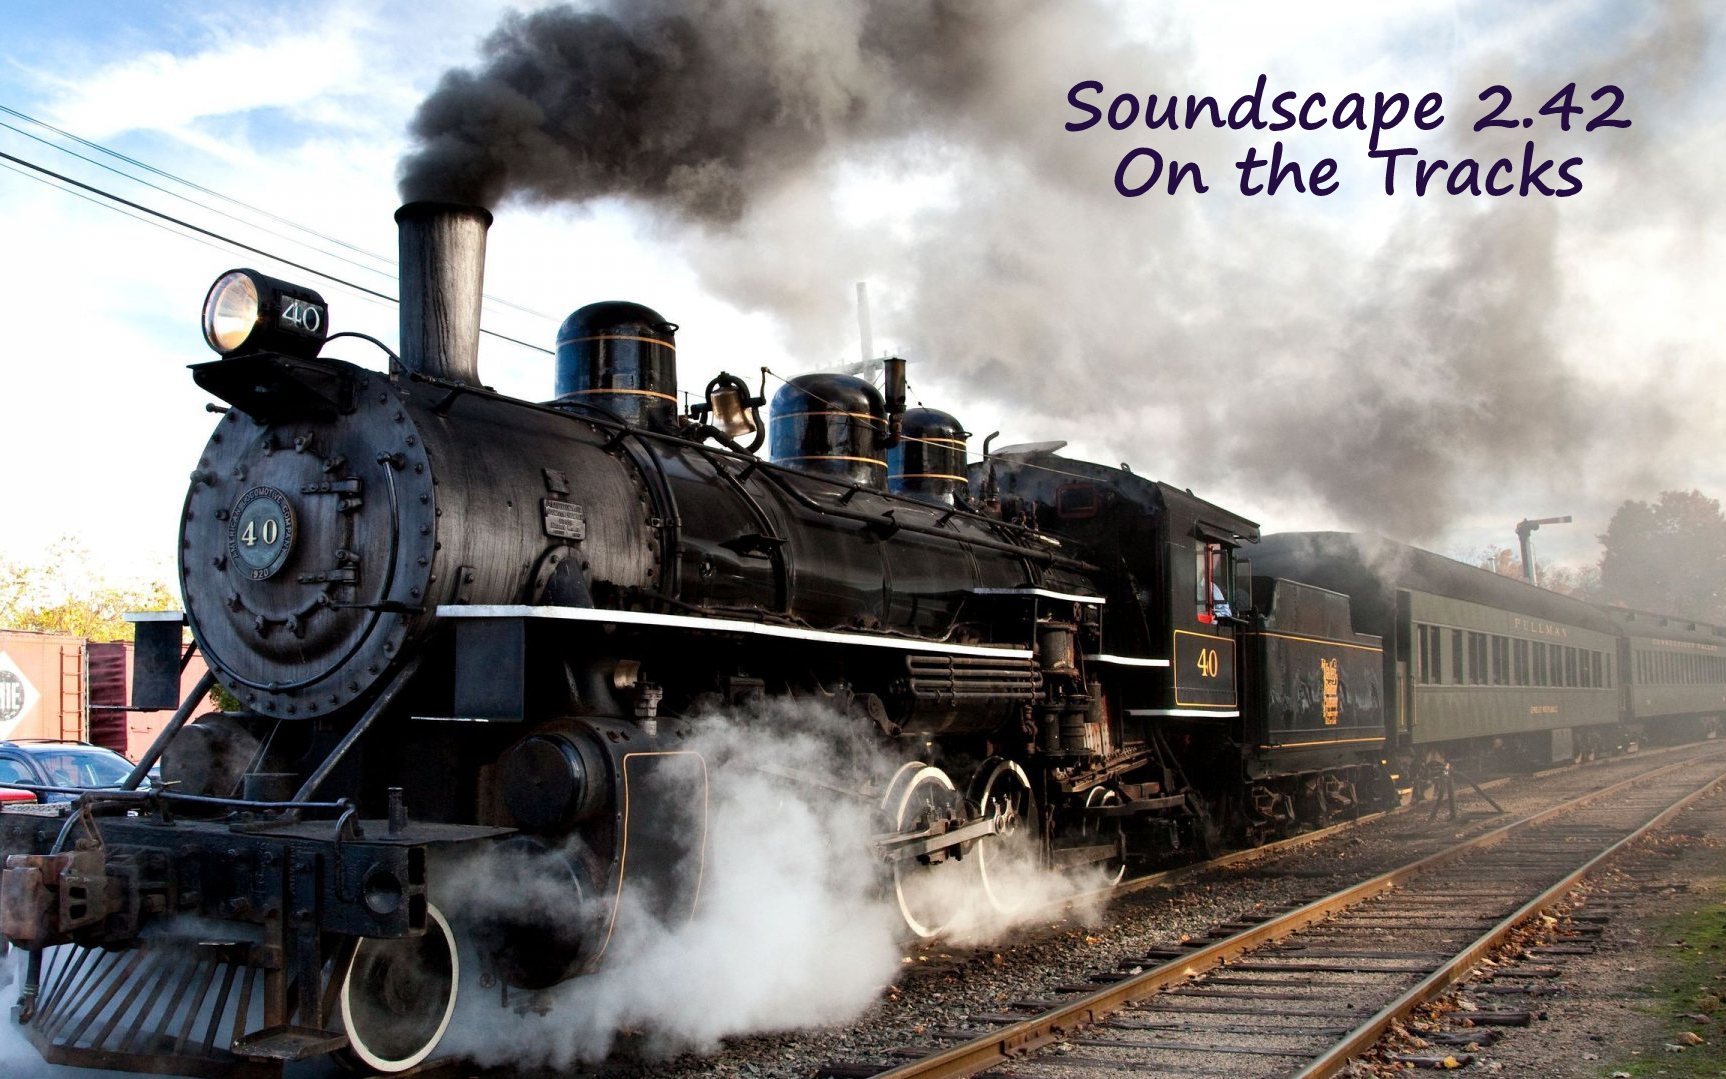 Soundscape 2.42 On the Track